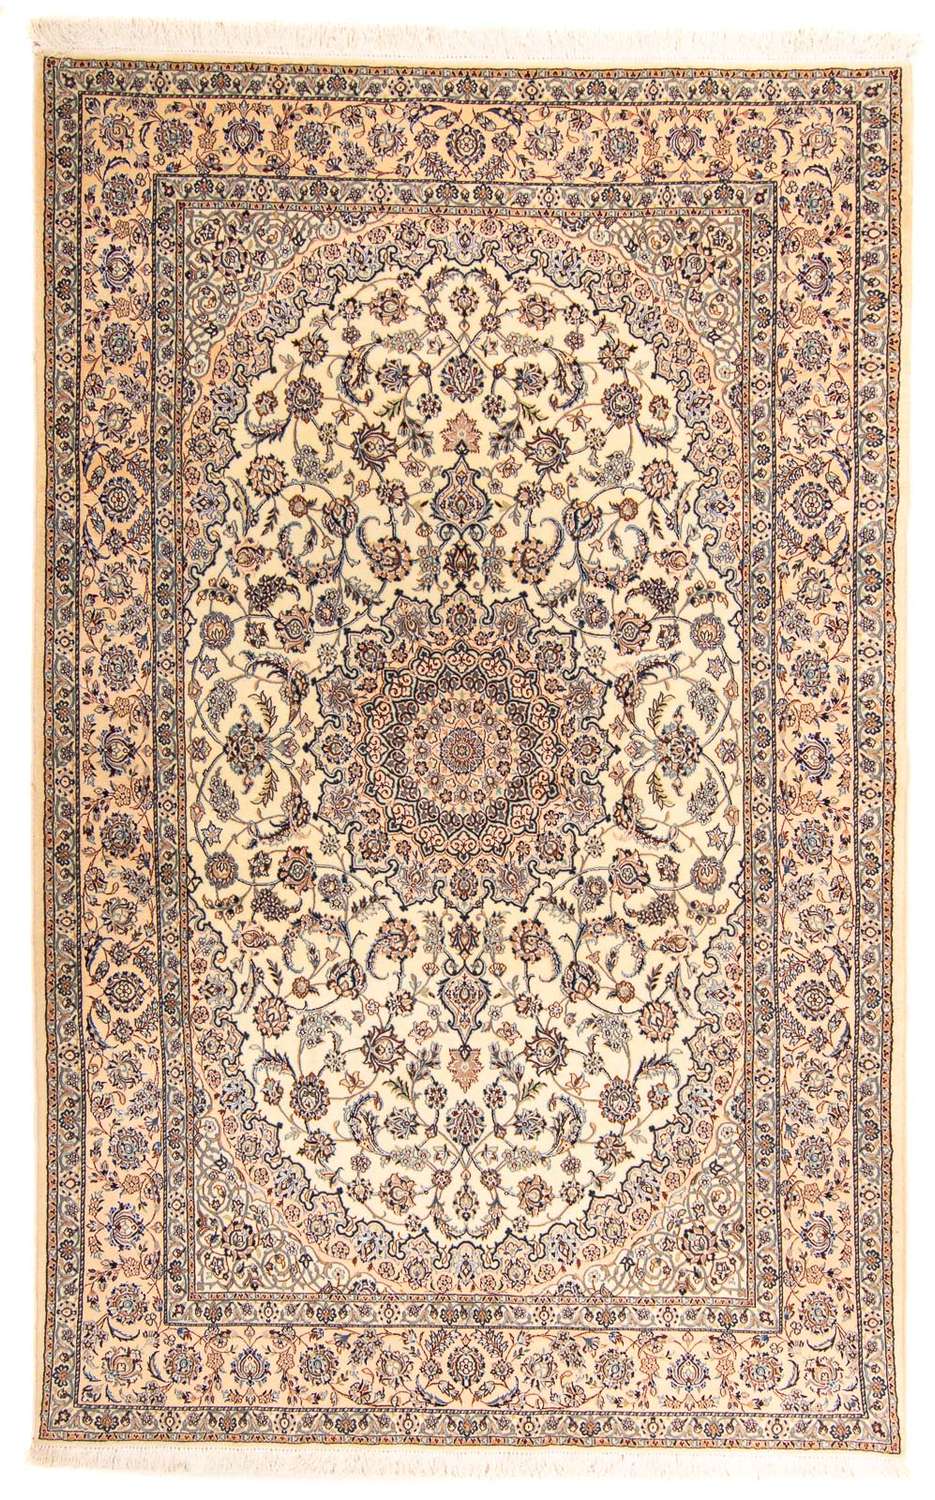 Tapis persan - Nain - Premium - 264 x 155 cm - beige